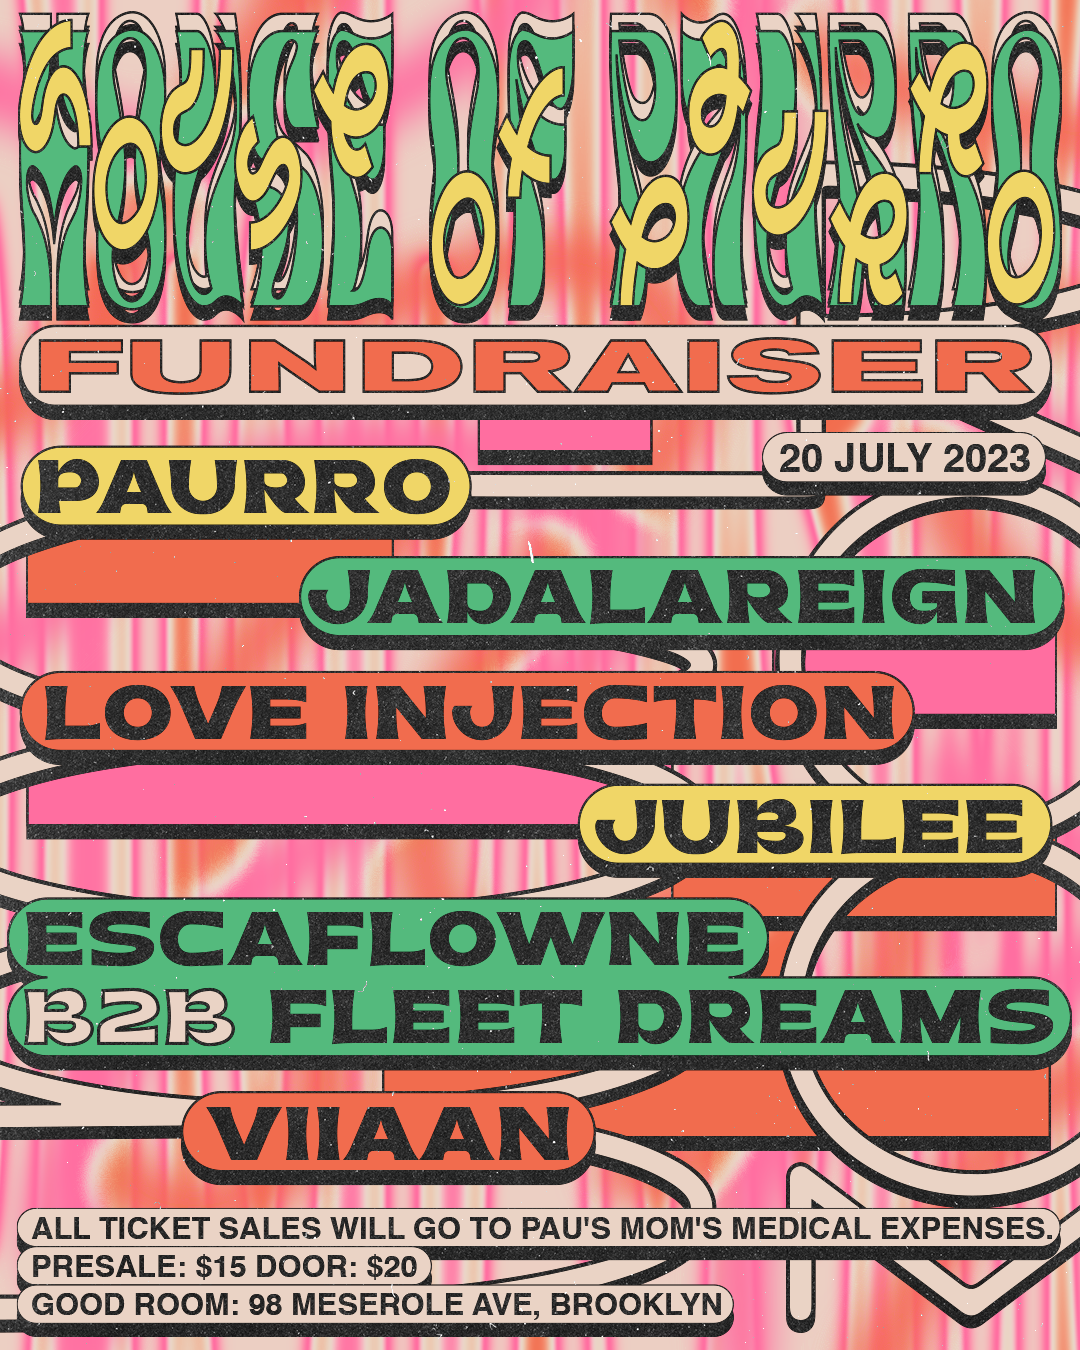 House Of Paurro Fundraiser ft Paurro, JADALAREIGN, Love Injection, Jubilee, EscaFlowne + more - Página frontal